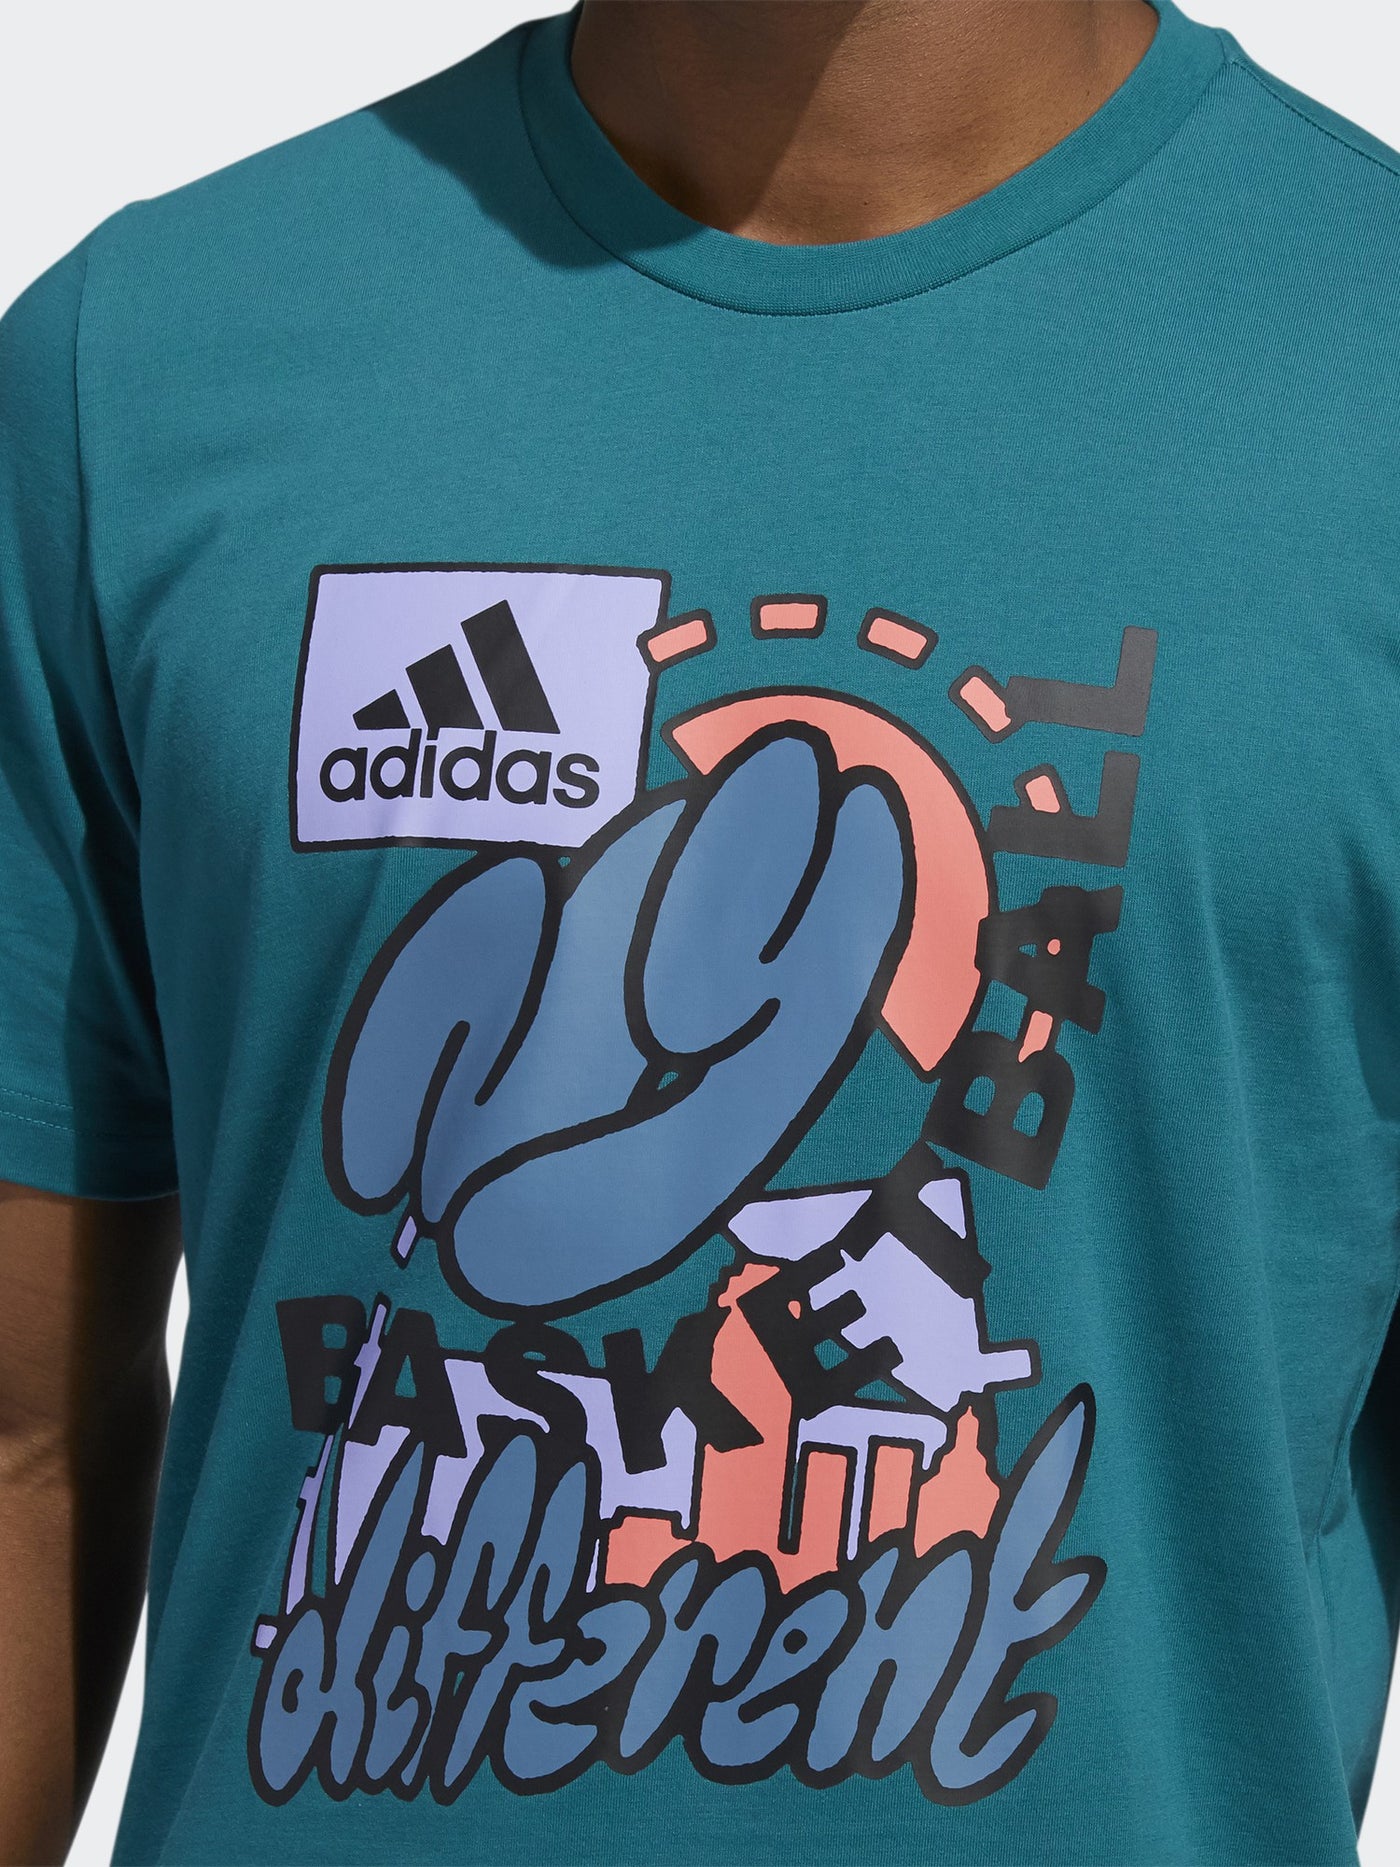 NY Hoops Graphic T-Shirt